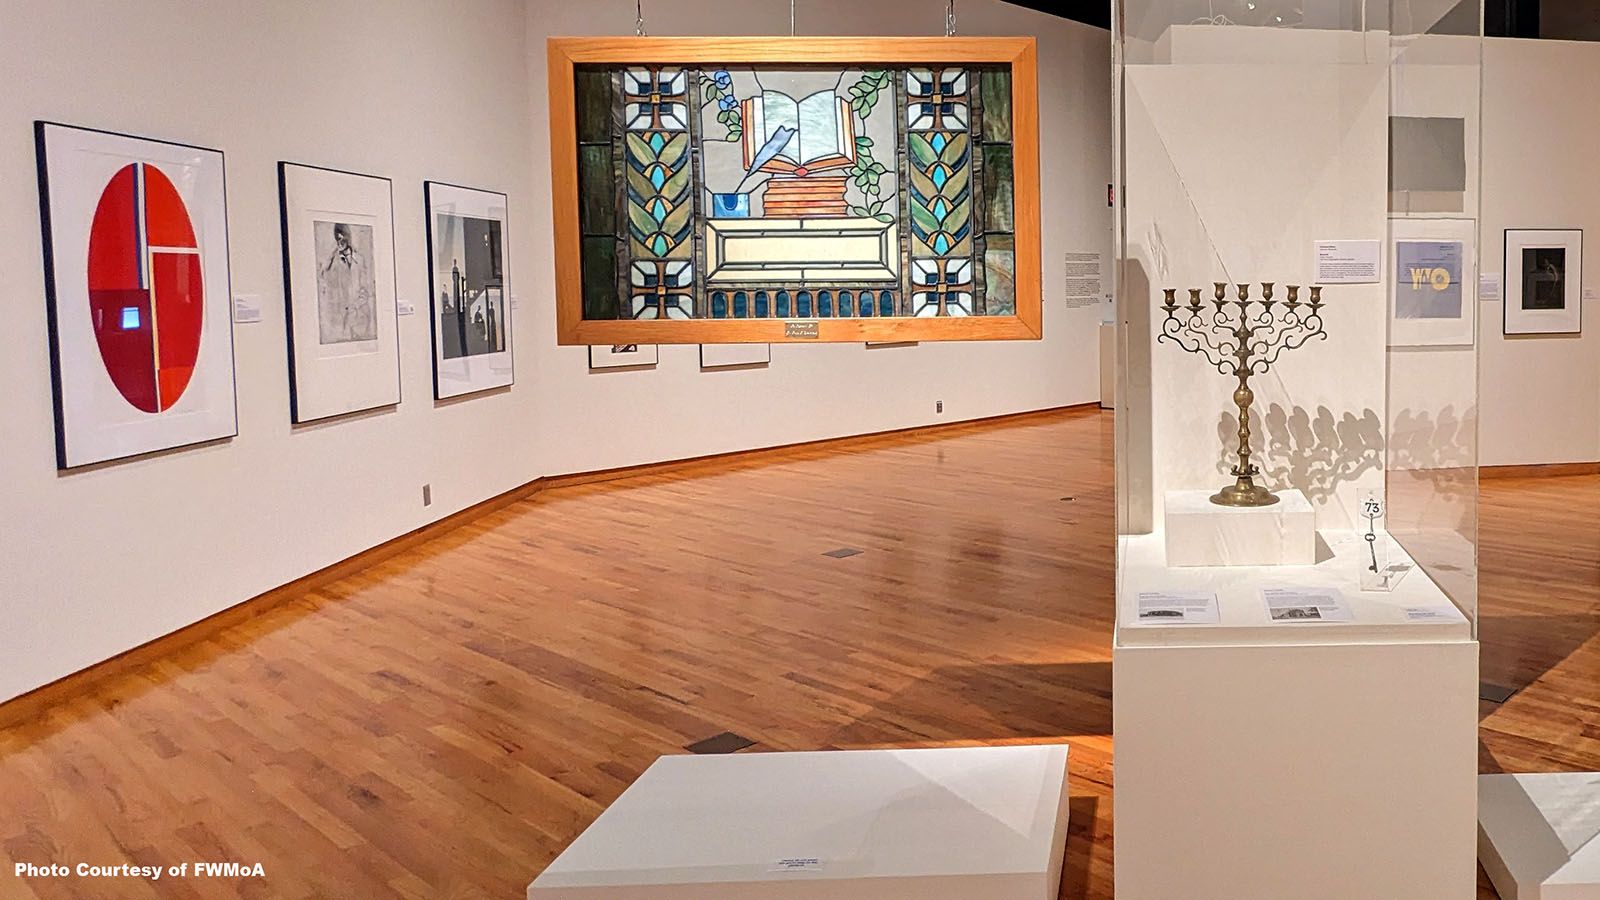 The Jewish History and Art Illuminated: 175 Years of Congregation Achduth Vesholom exhibit at Fort Wayne Museum of Art runs through Jan. 28.